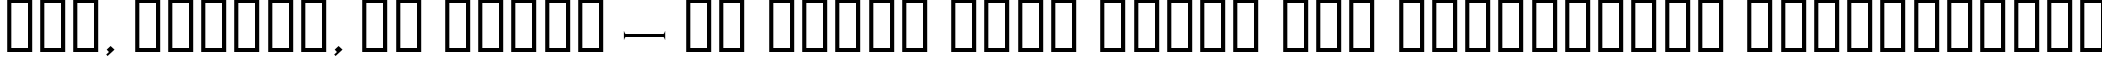 Пример написания шрифтом AvalonQuest текста на украинском